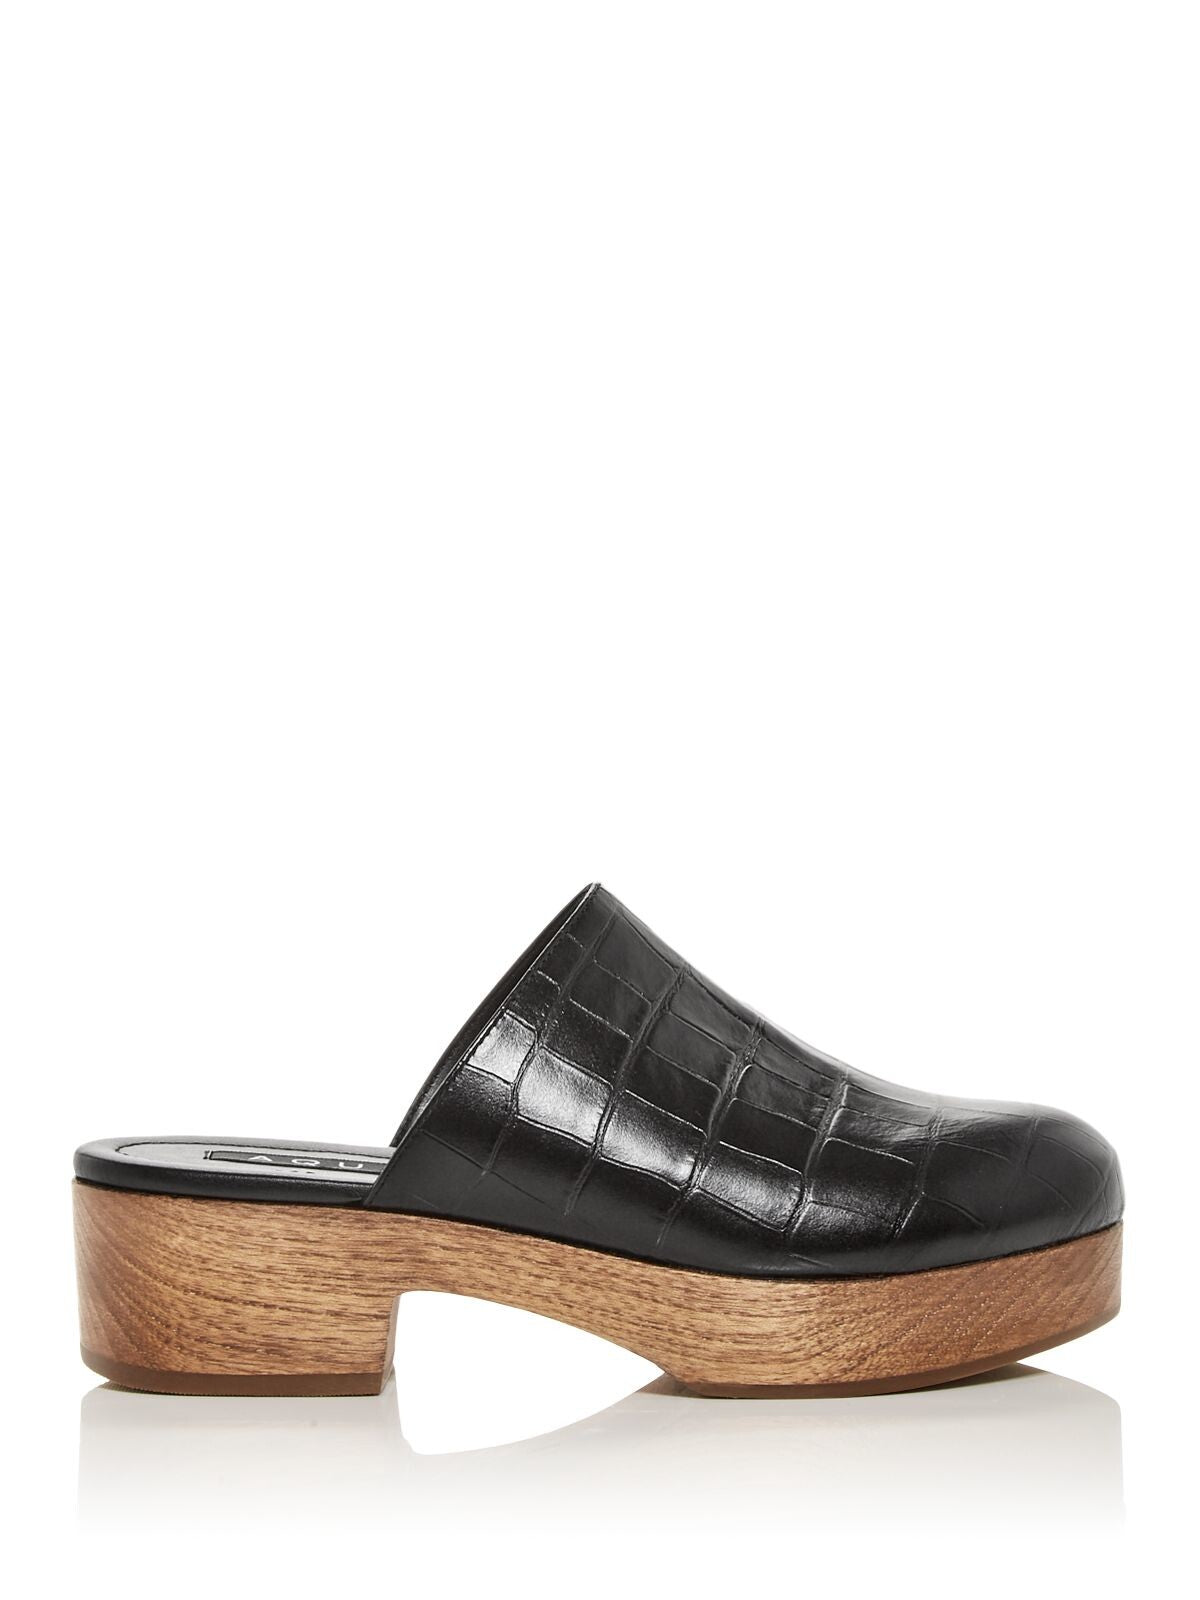 AQUA Womens Black Crocodile Comfort Round Toe Block Heel Slip On Leather Clogs Shoes 9 B